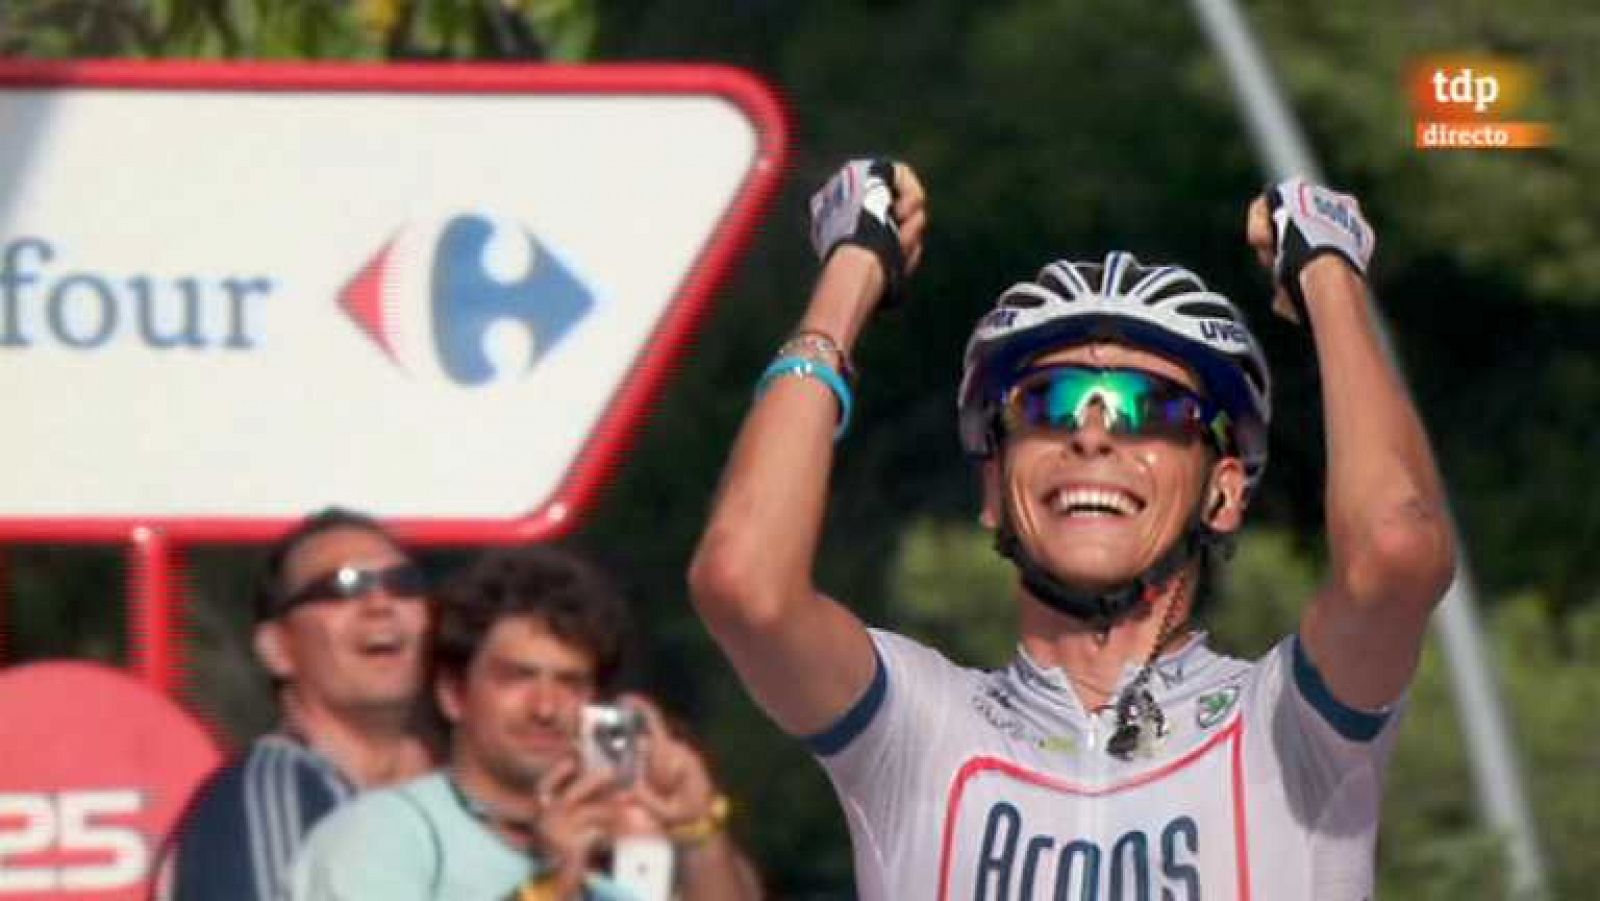 Vuelta ciclista a España 2013 - 13ª etapa: Valls - Castelldefels